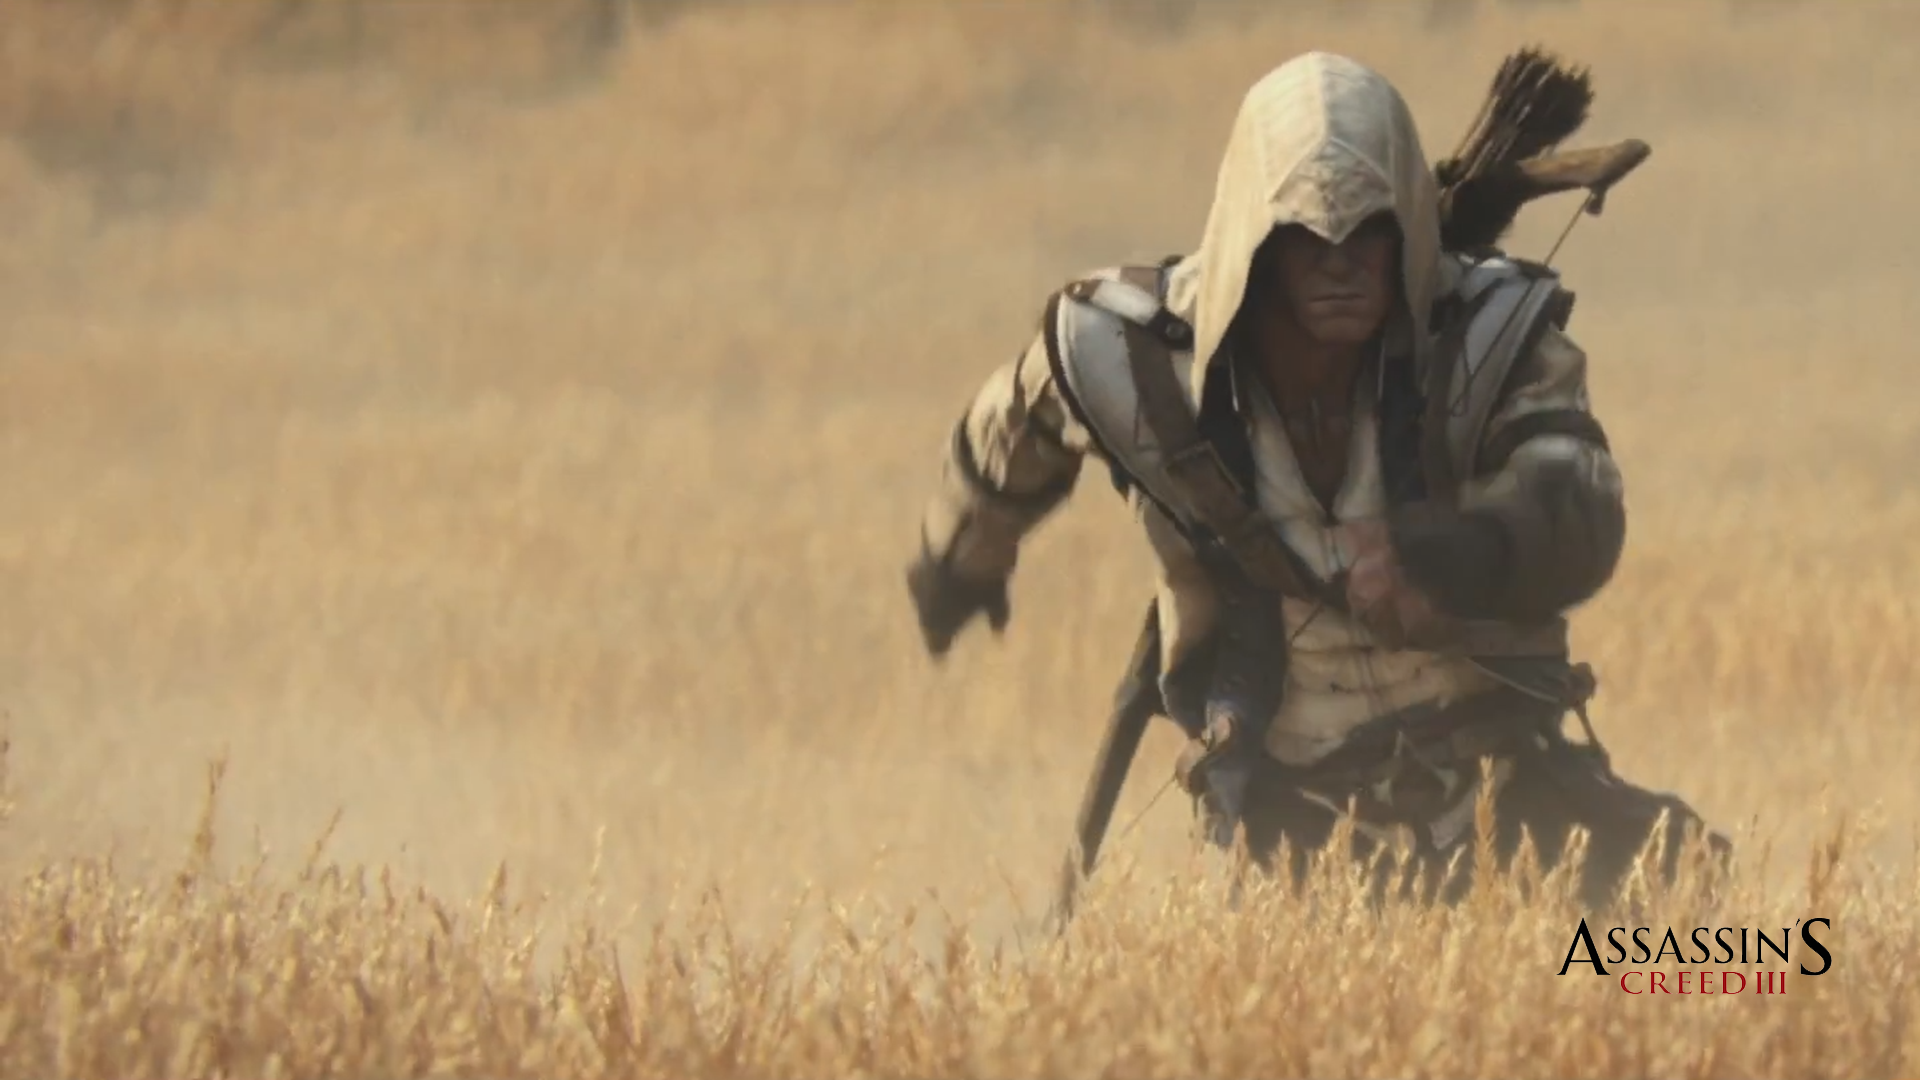 Assassin's Creed III - The Assassin's Wallpaper (32522067) - Fanpop